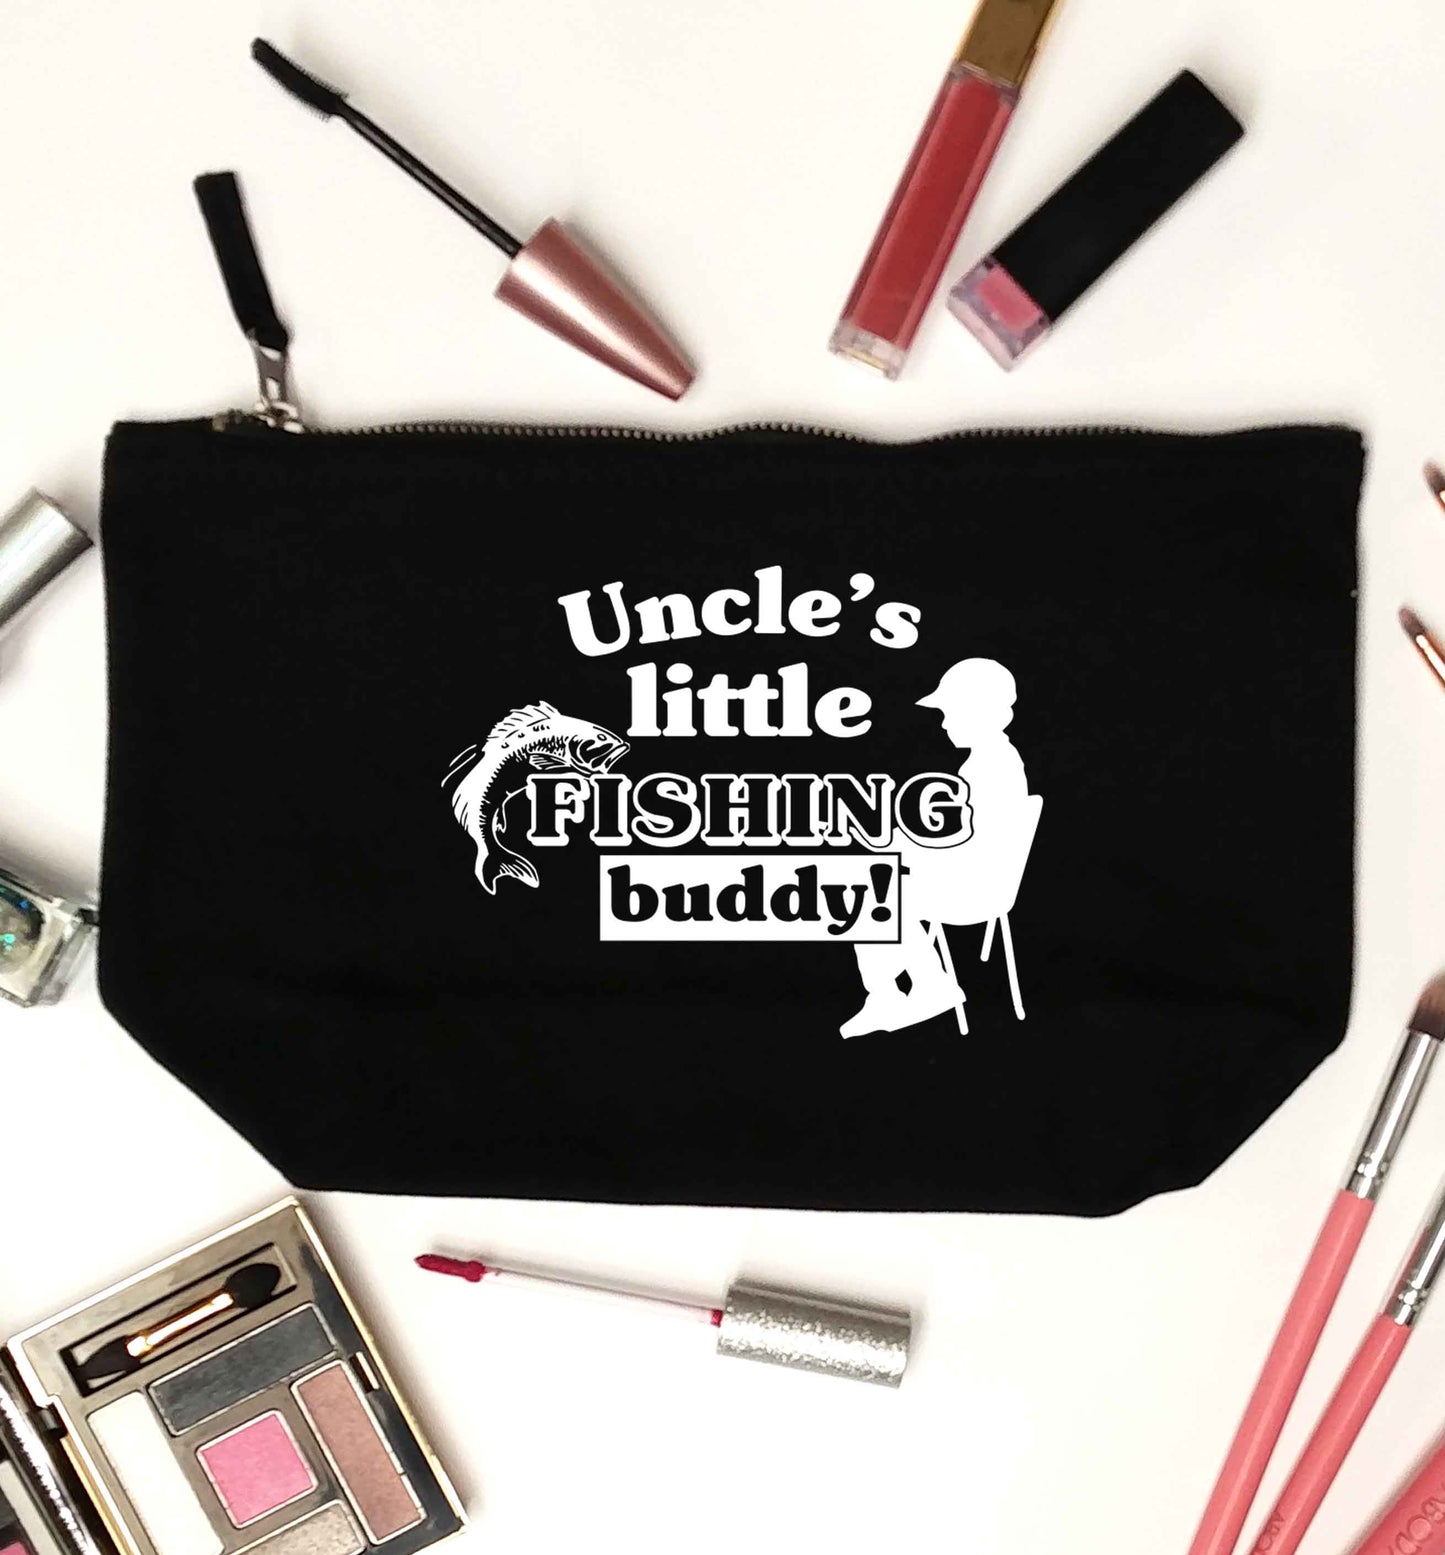 Uncle's little fishing buddy black makeup bag